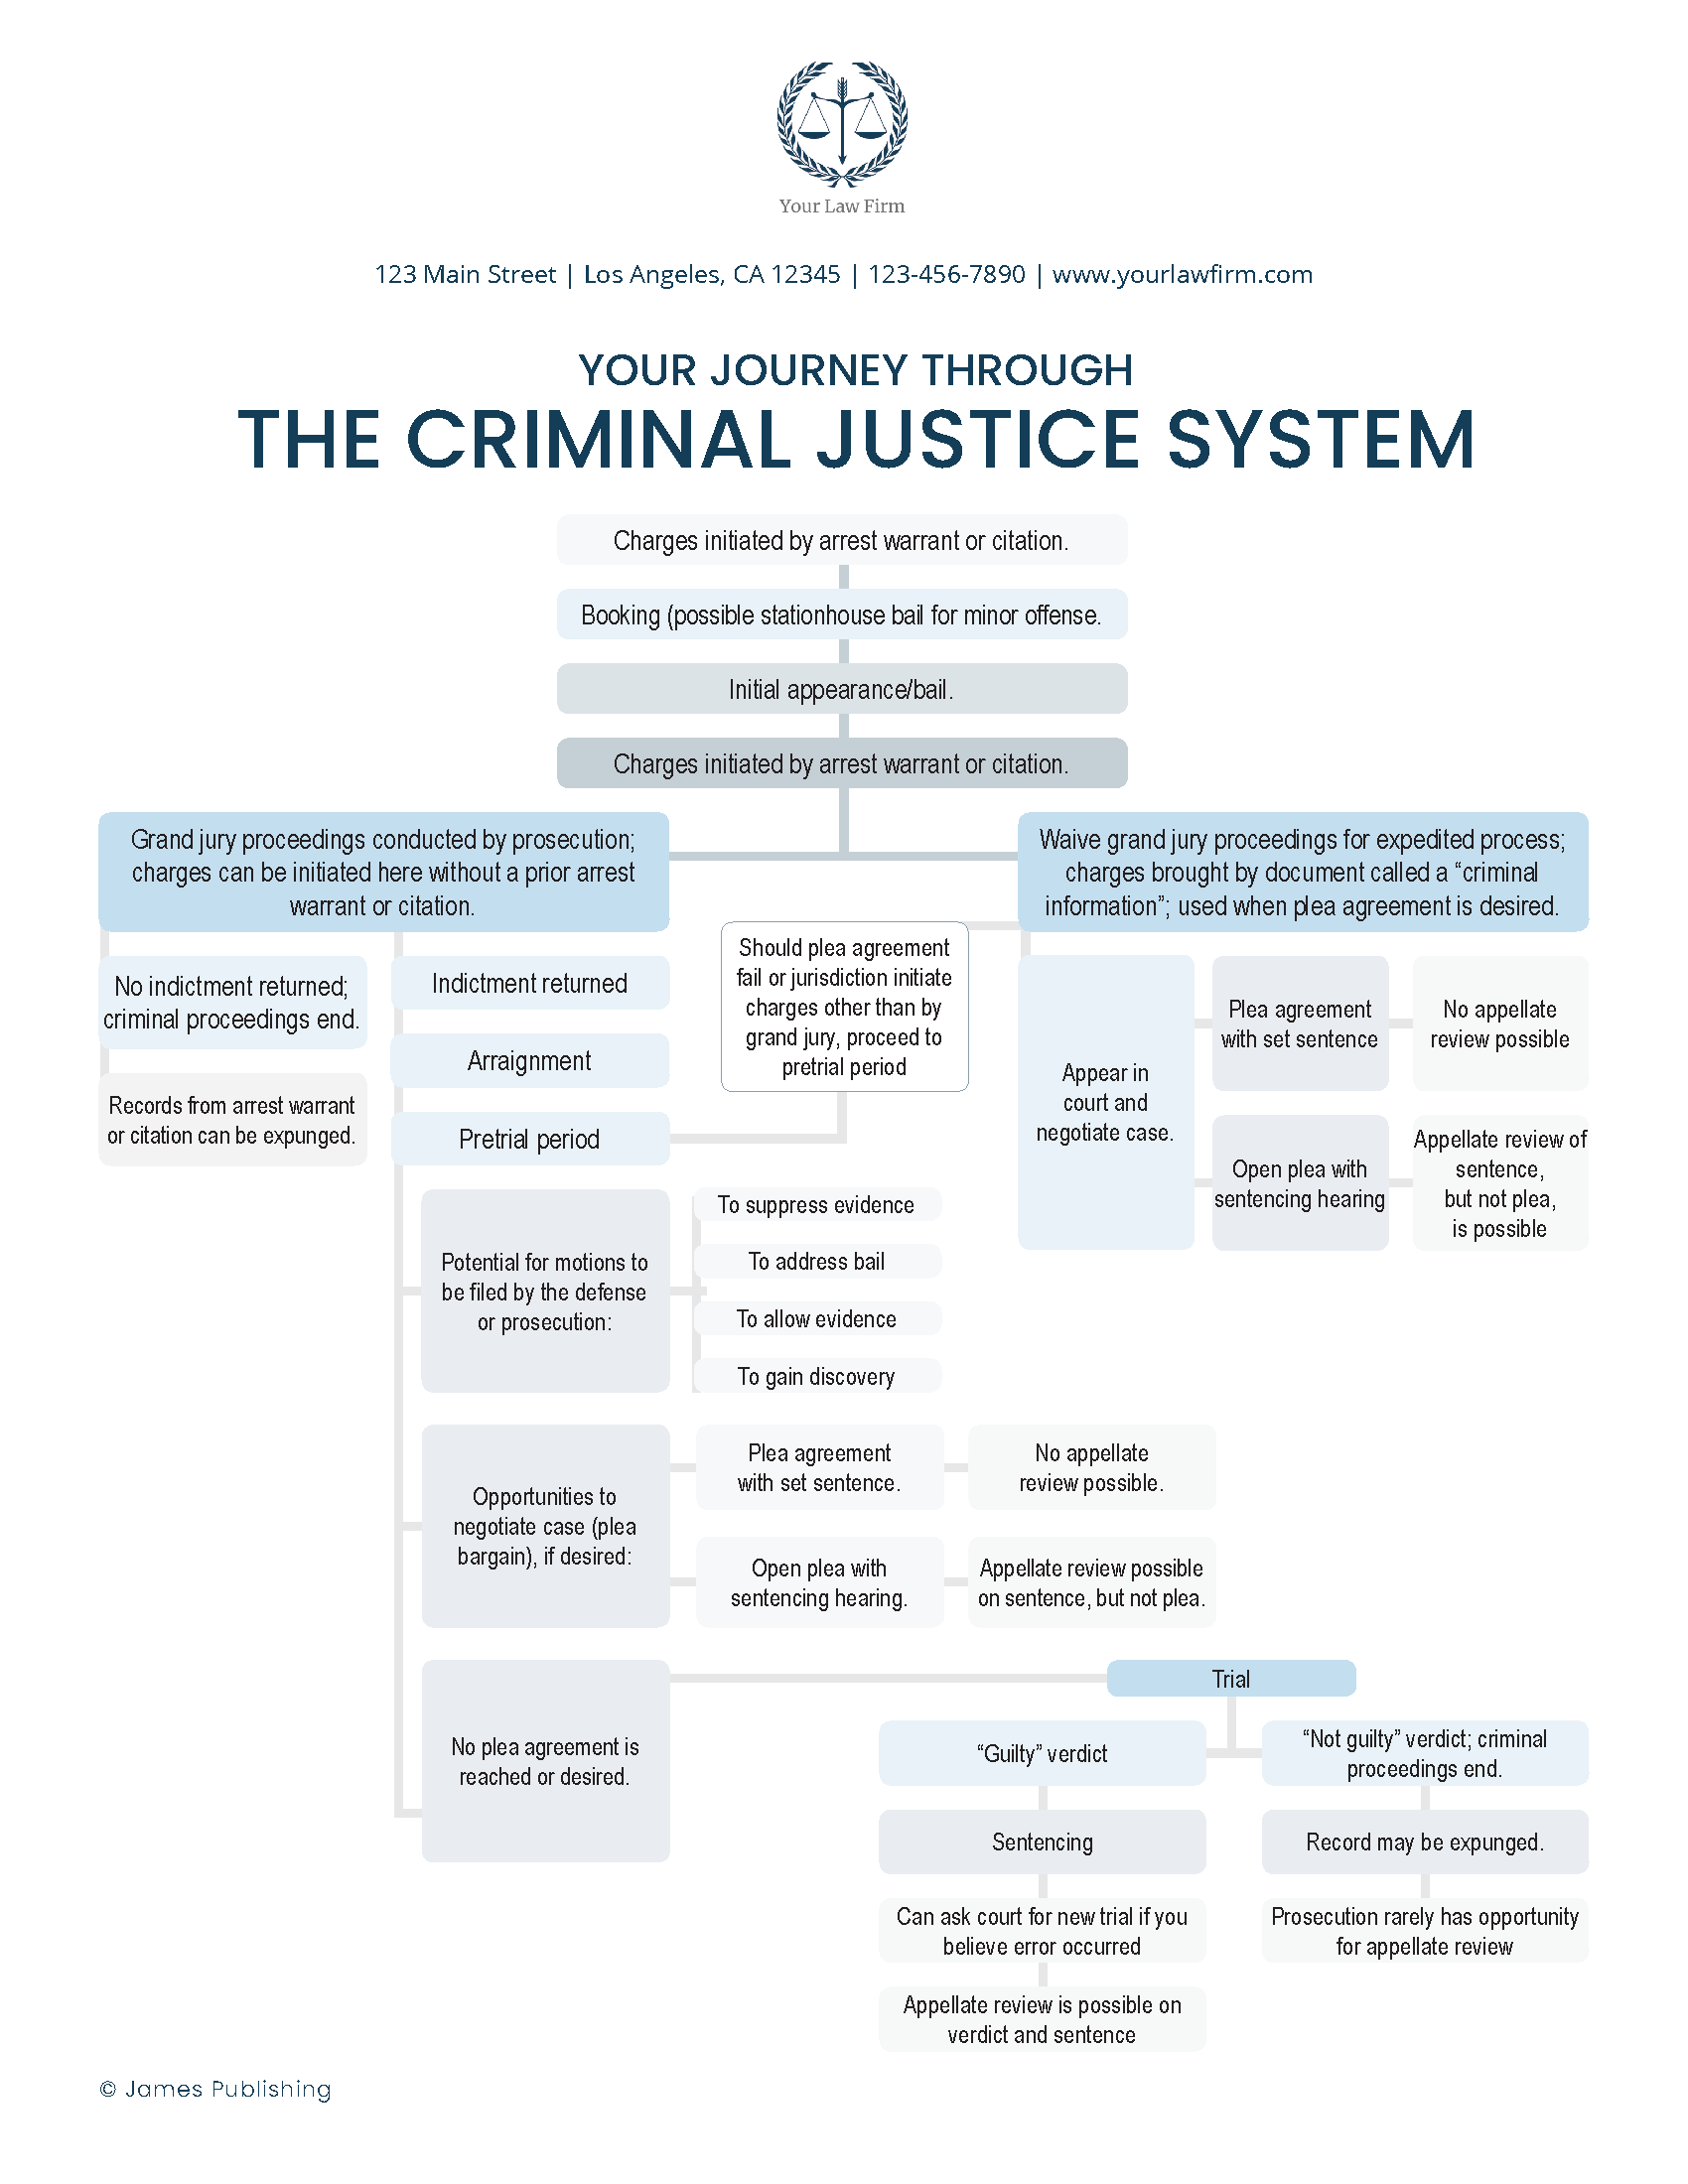 CRIM-21 Flowchart - Your Journey Through the Criminal Justice System